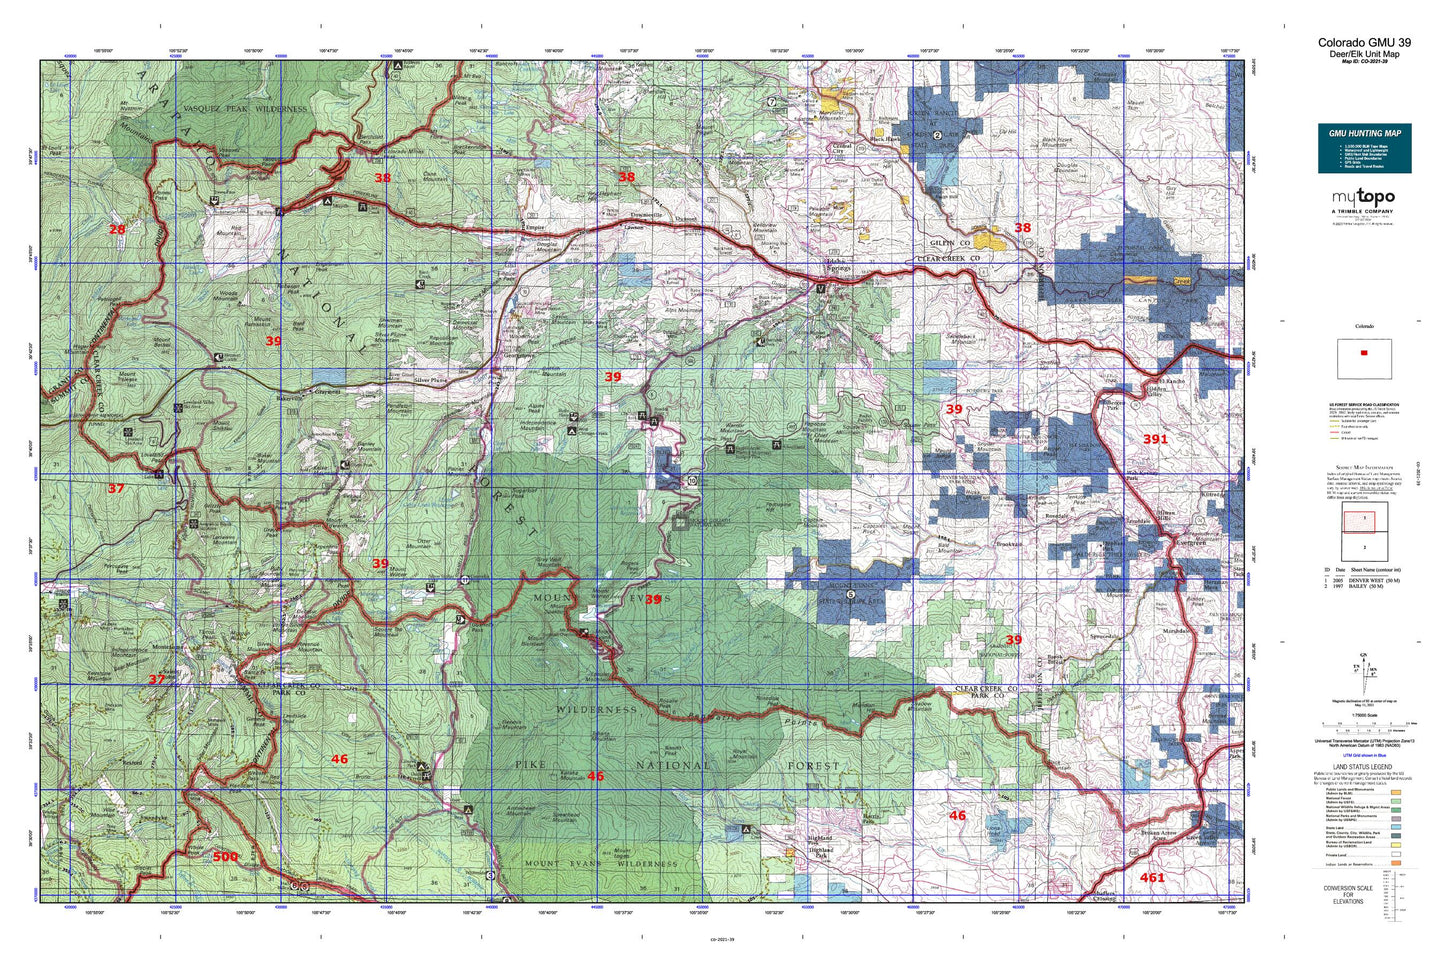 Colorado GMU 39 Map Image